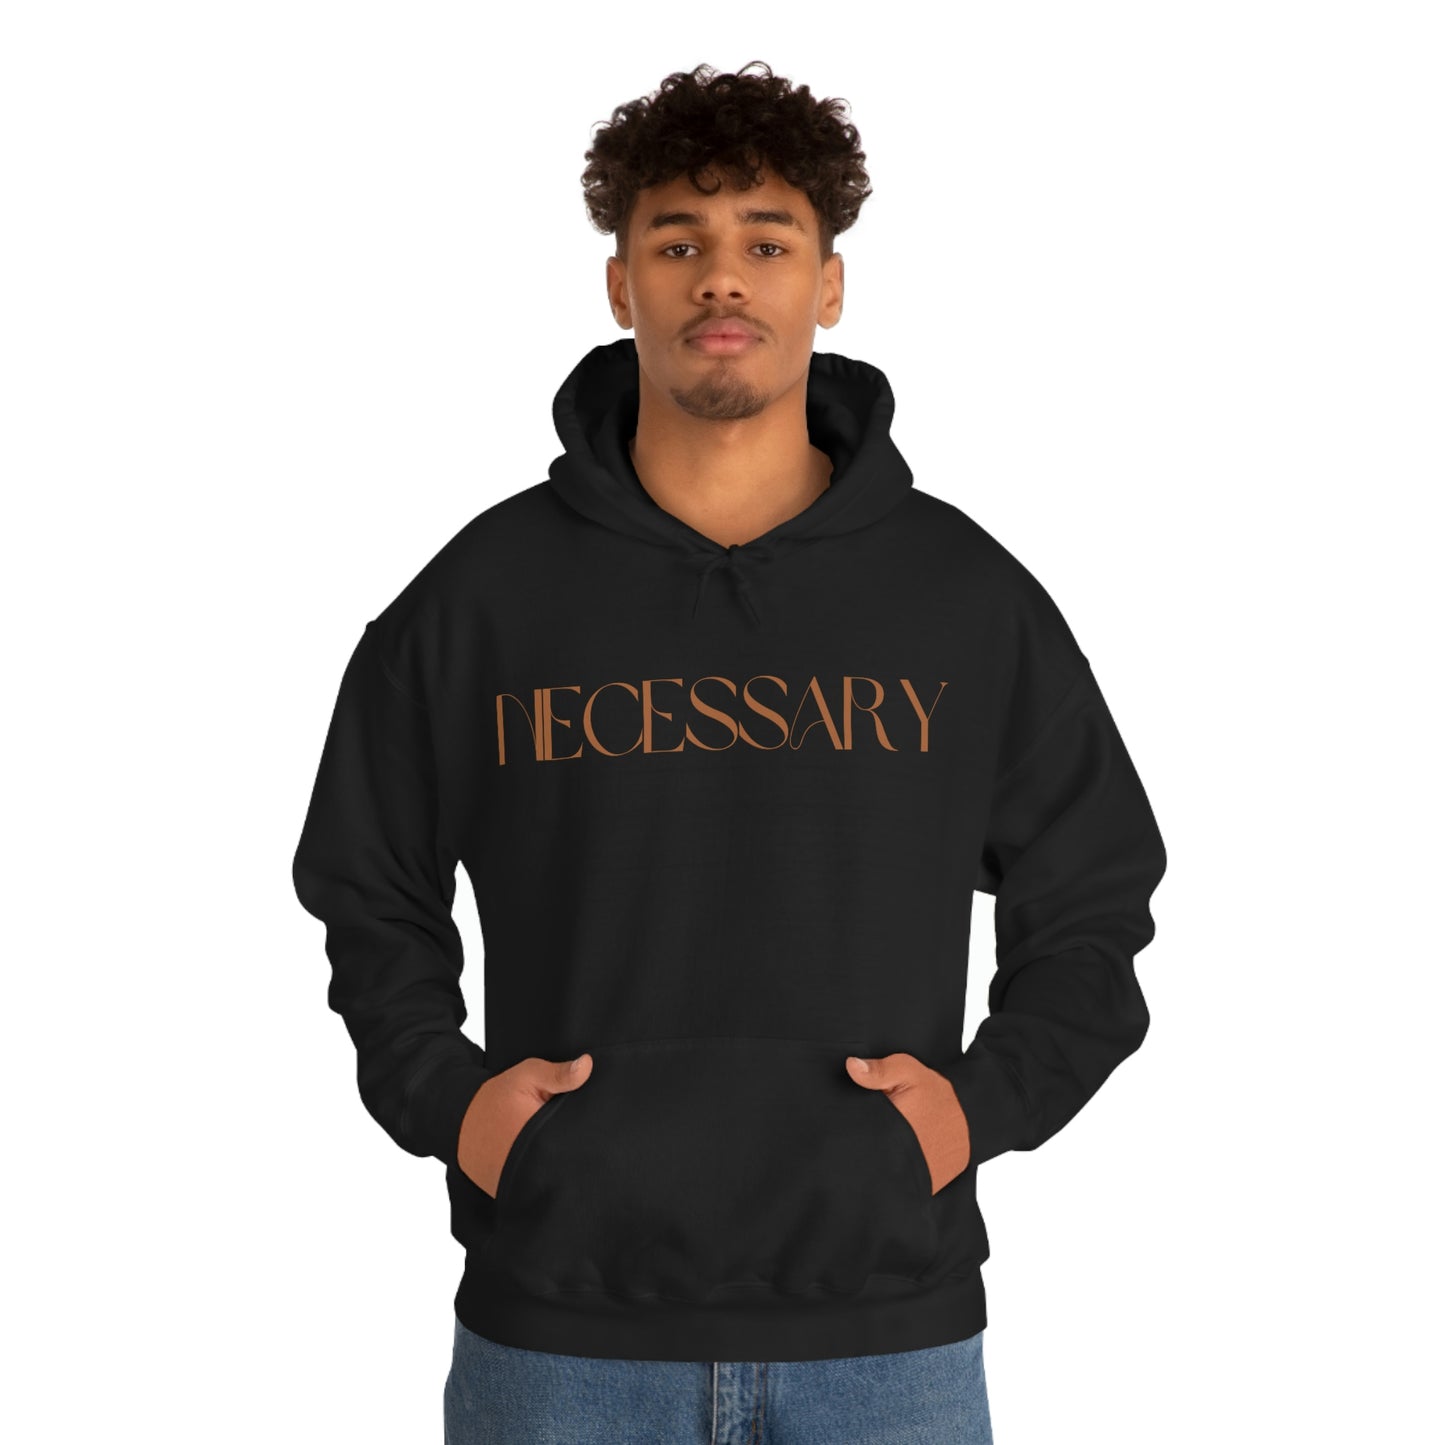 "necessary" Unisex Heavy Blend™ Hooded Sweatshirt - Black, Dark Chocolate & Forest Green Available